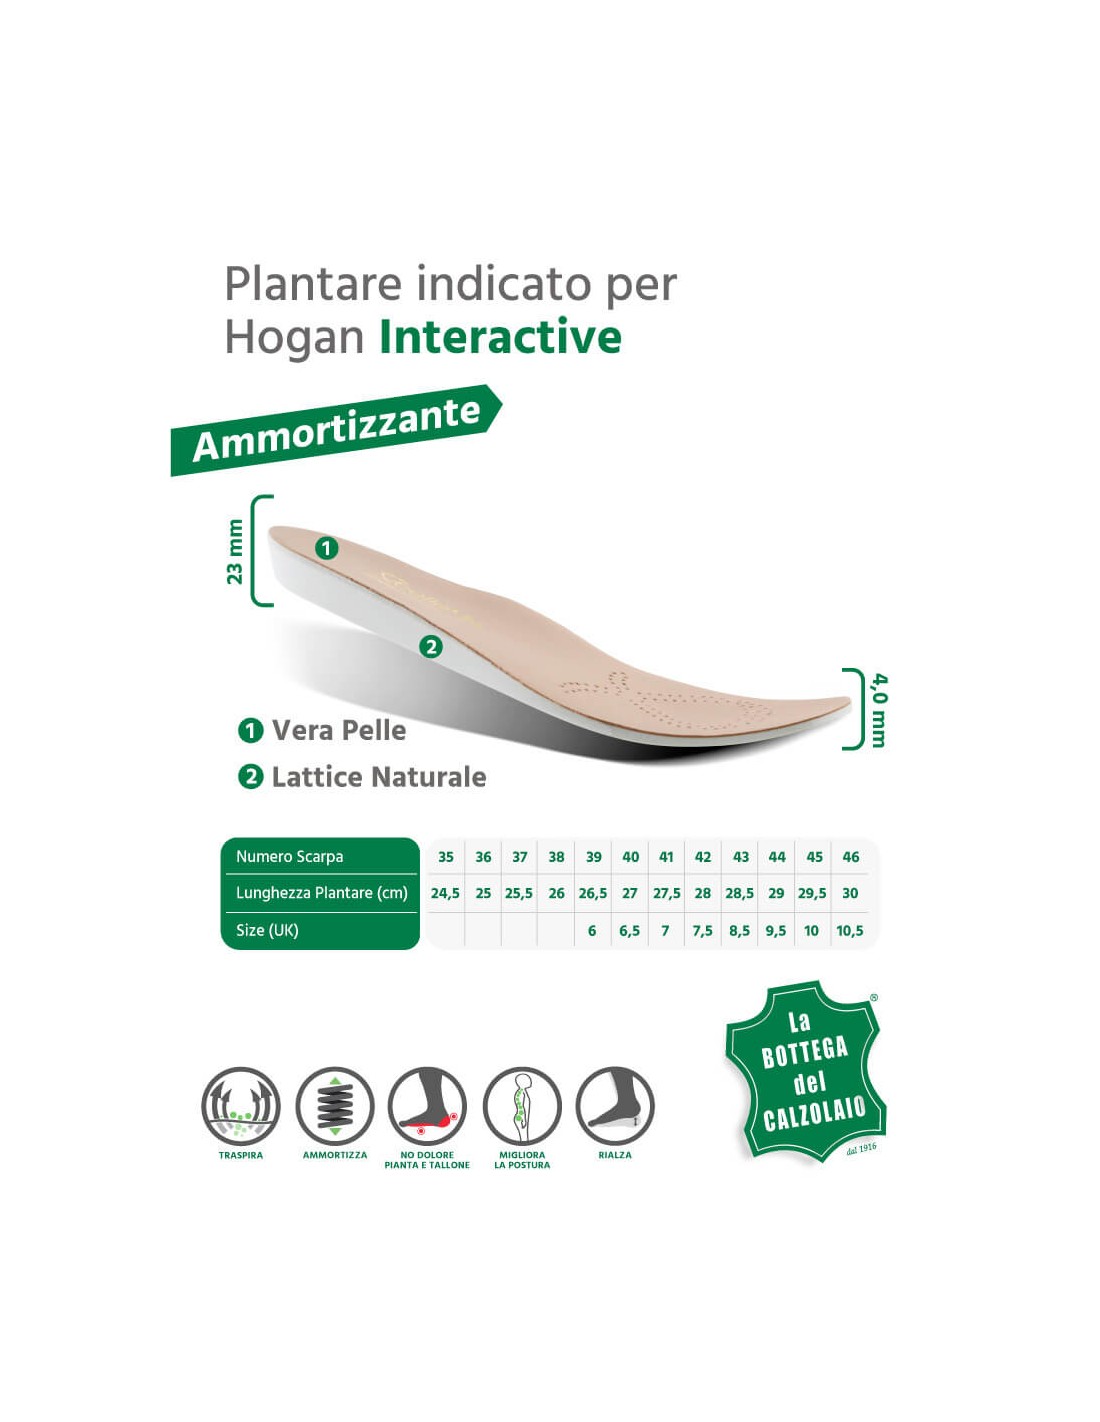 Plantari di ricambio per scarpe Hogan | Solette per Hogan Interactive